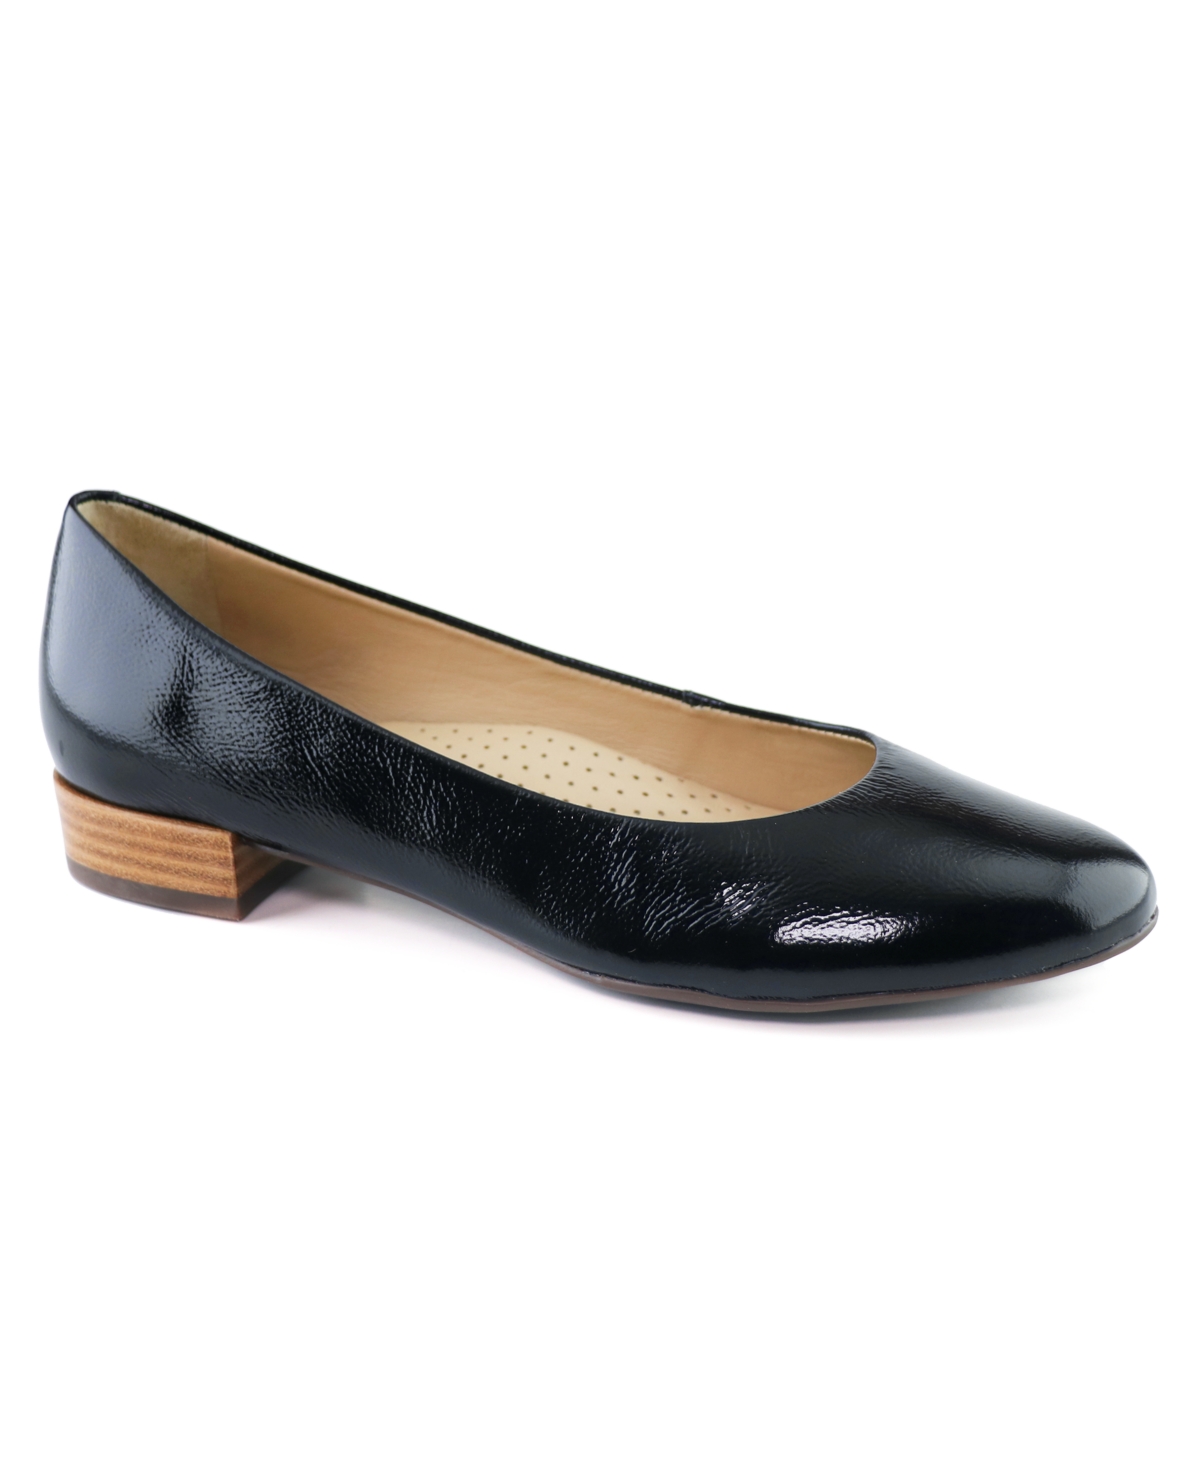 Women's Ferris 2.0 Leather Slip-on - Black Svelte Patent